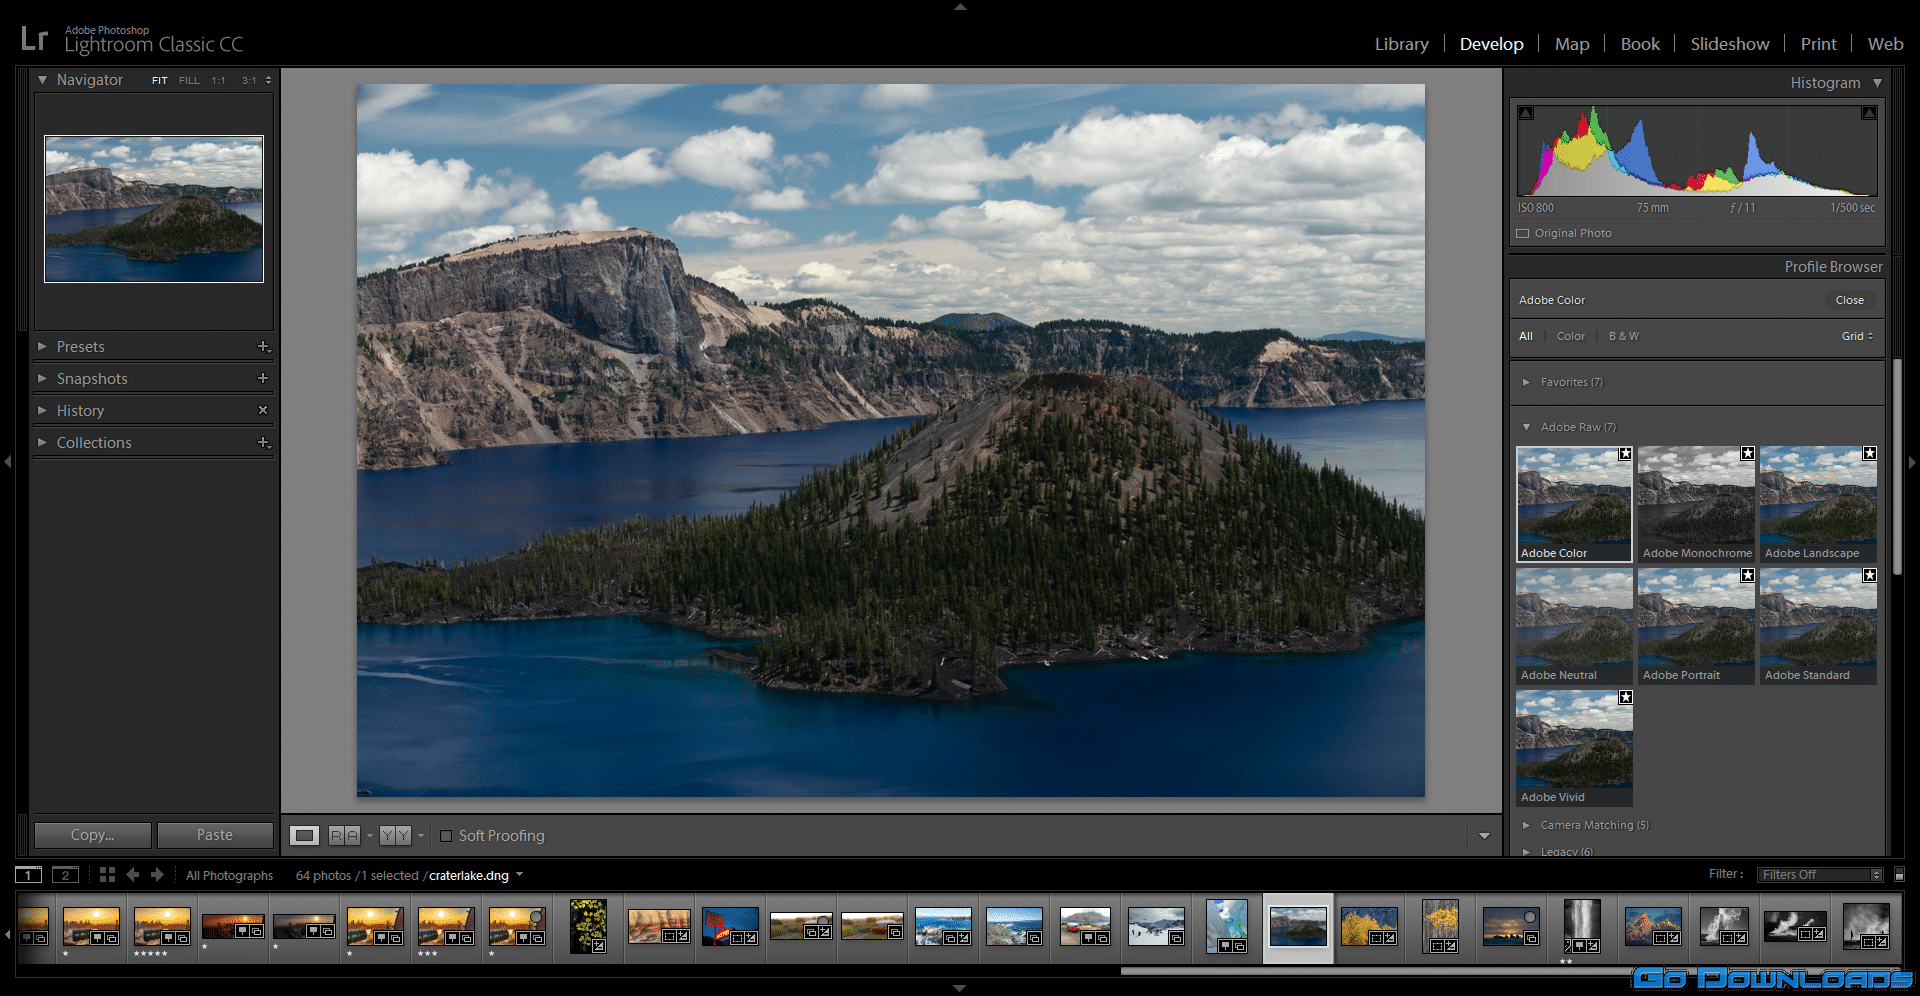 adobe photoshop lightroom cc 2015 v6.5 - mac os x torrent